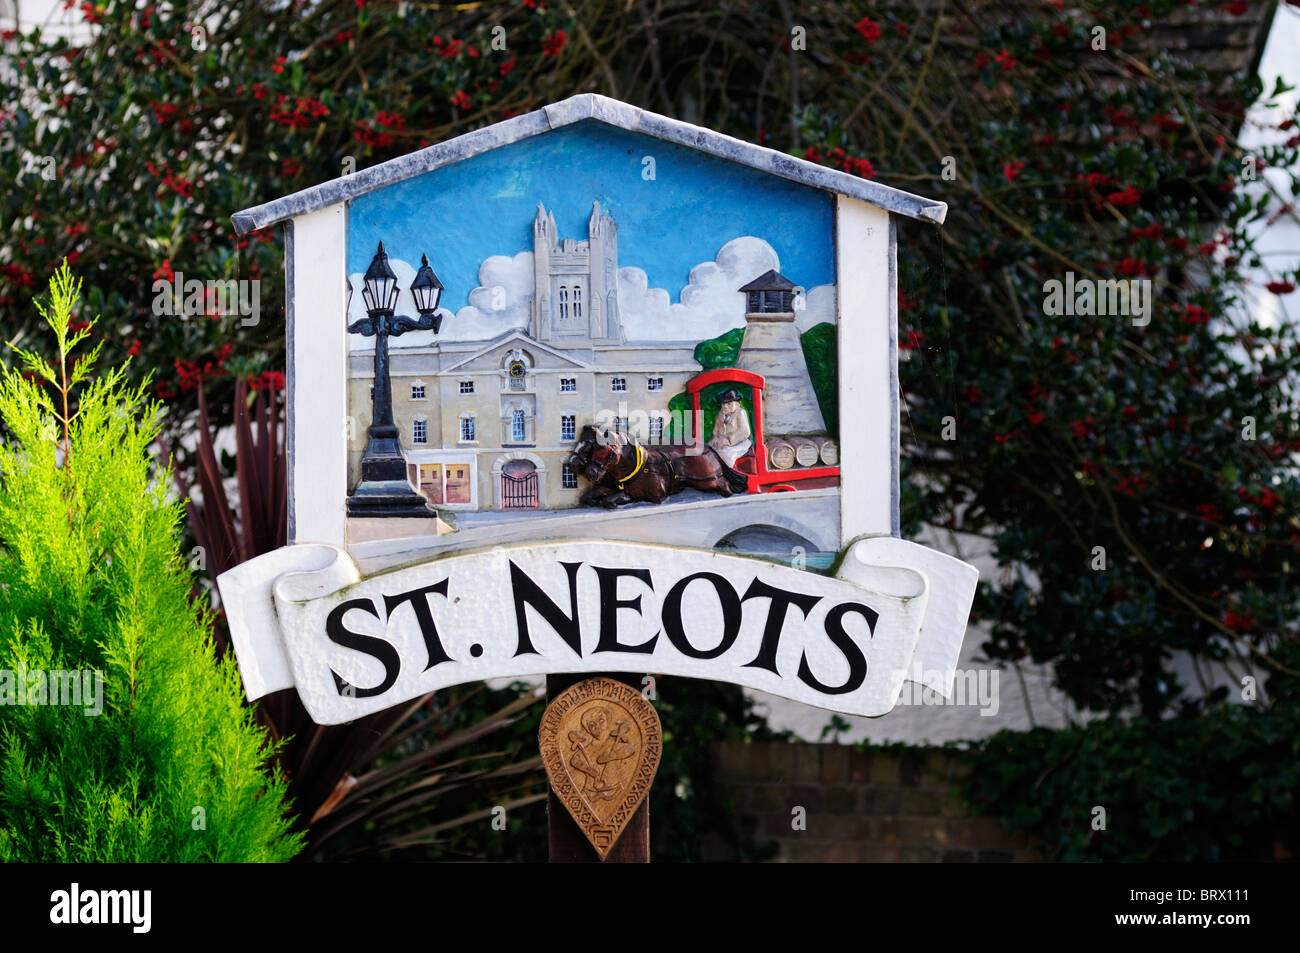 St Neots town sign, St Neots, Cambridgeshire, England, UK Stock Photo